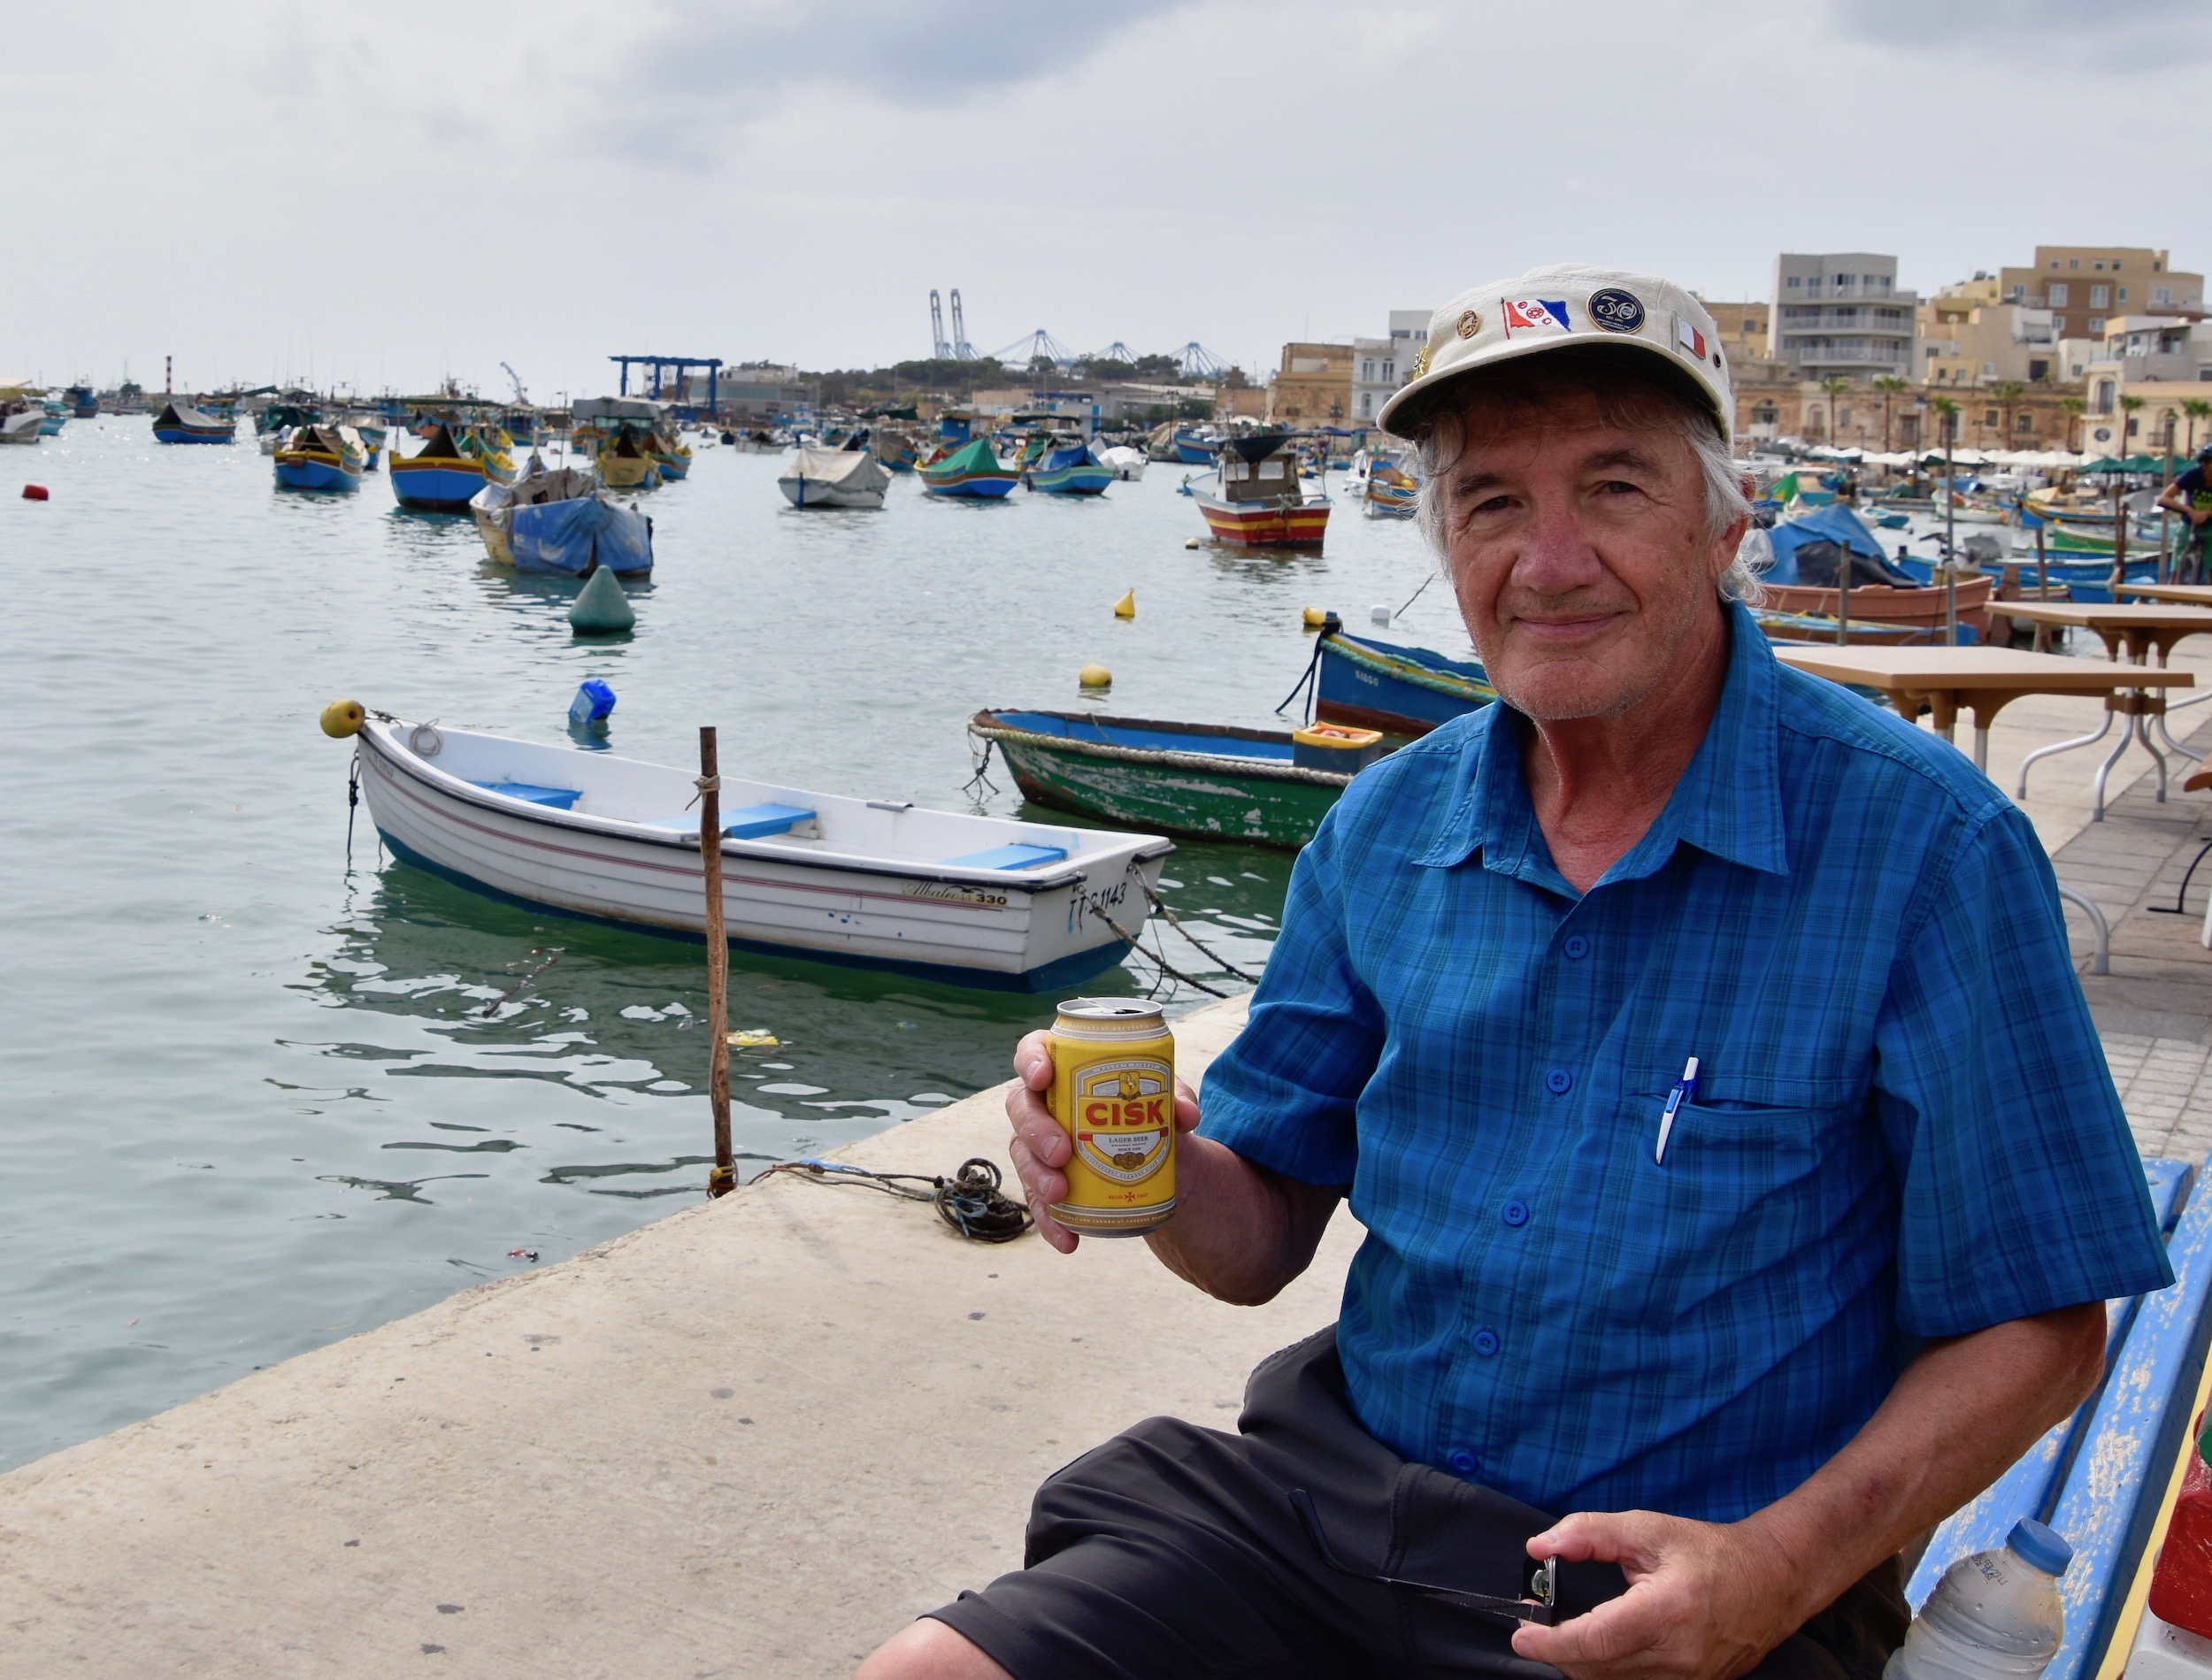 Maltese Food and Drink - Cisk Beer